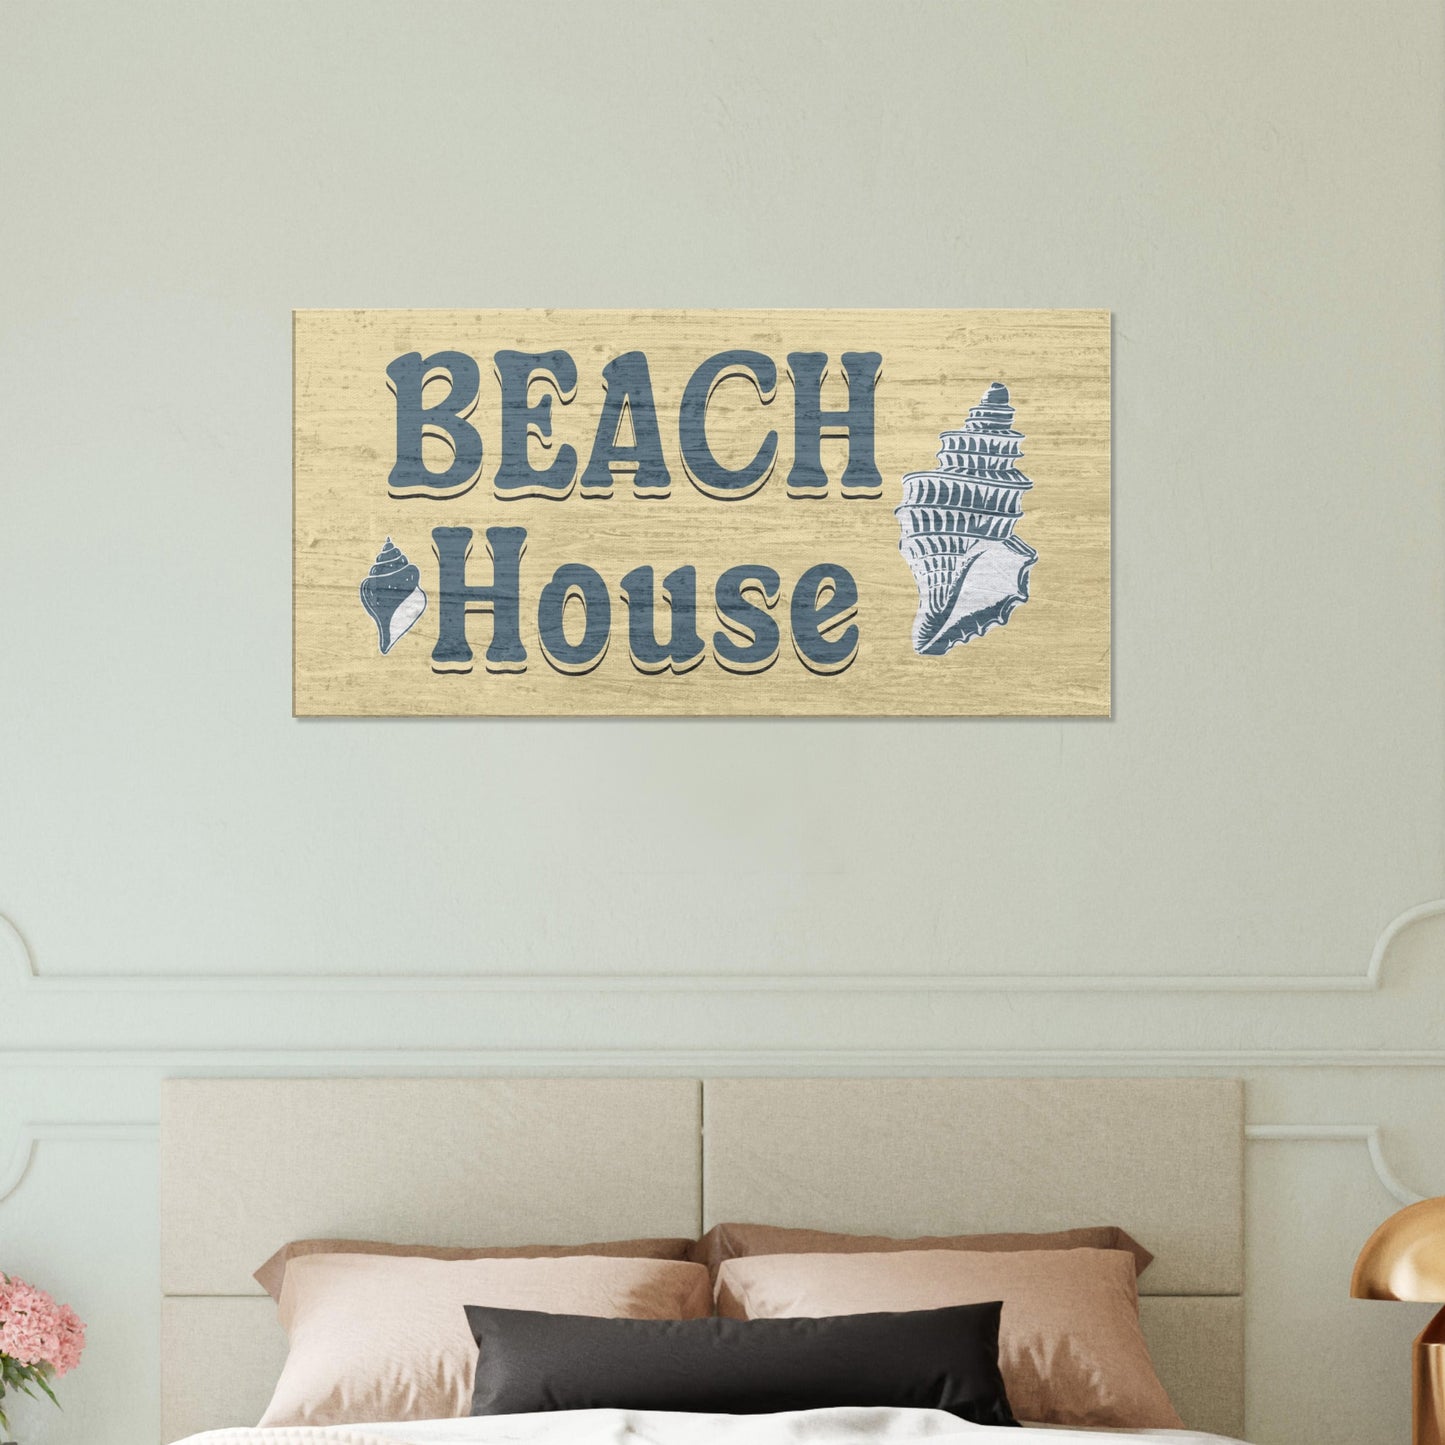 Beach House #1 Large Canvas Wall Prints 0n Caribbean Rays